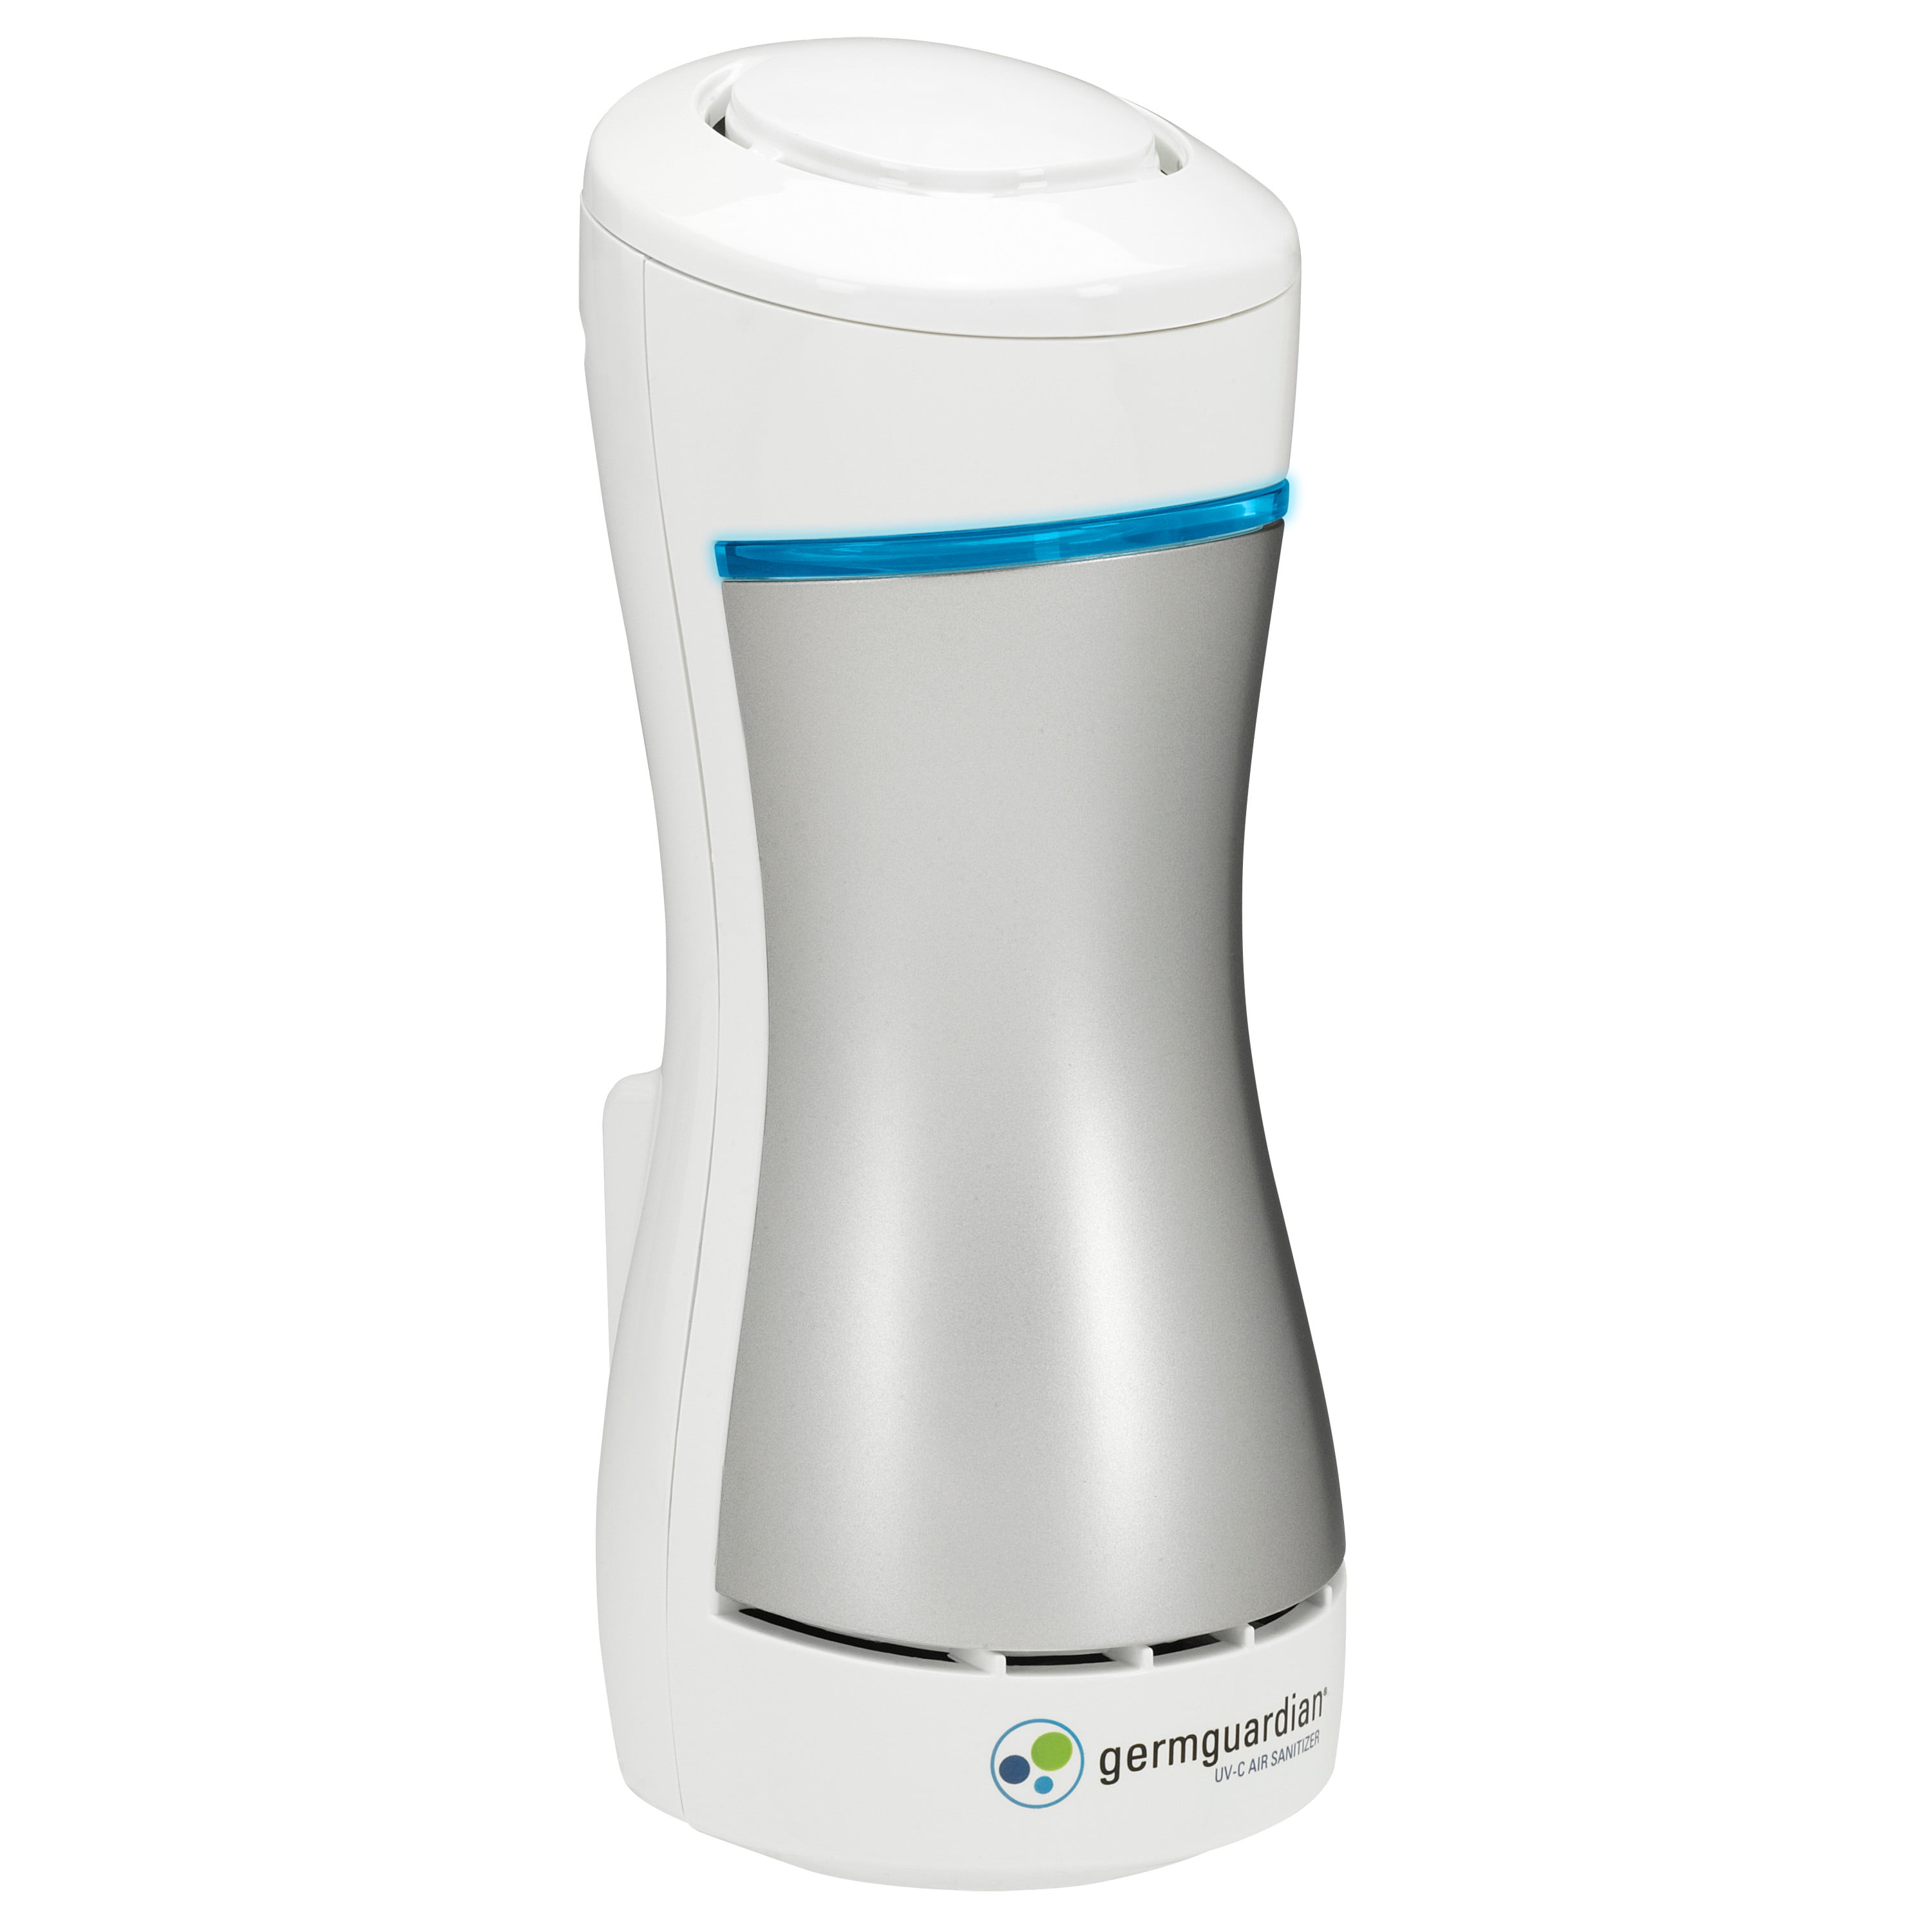 Portable pluggable air purifier, home air purifier, reduces pet odor,  provides fresh air, keeps the